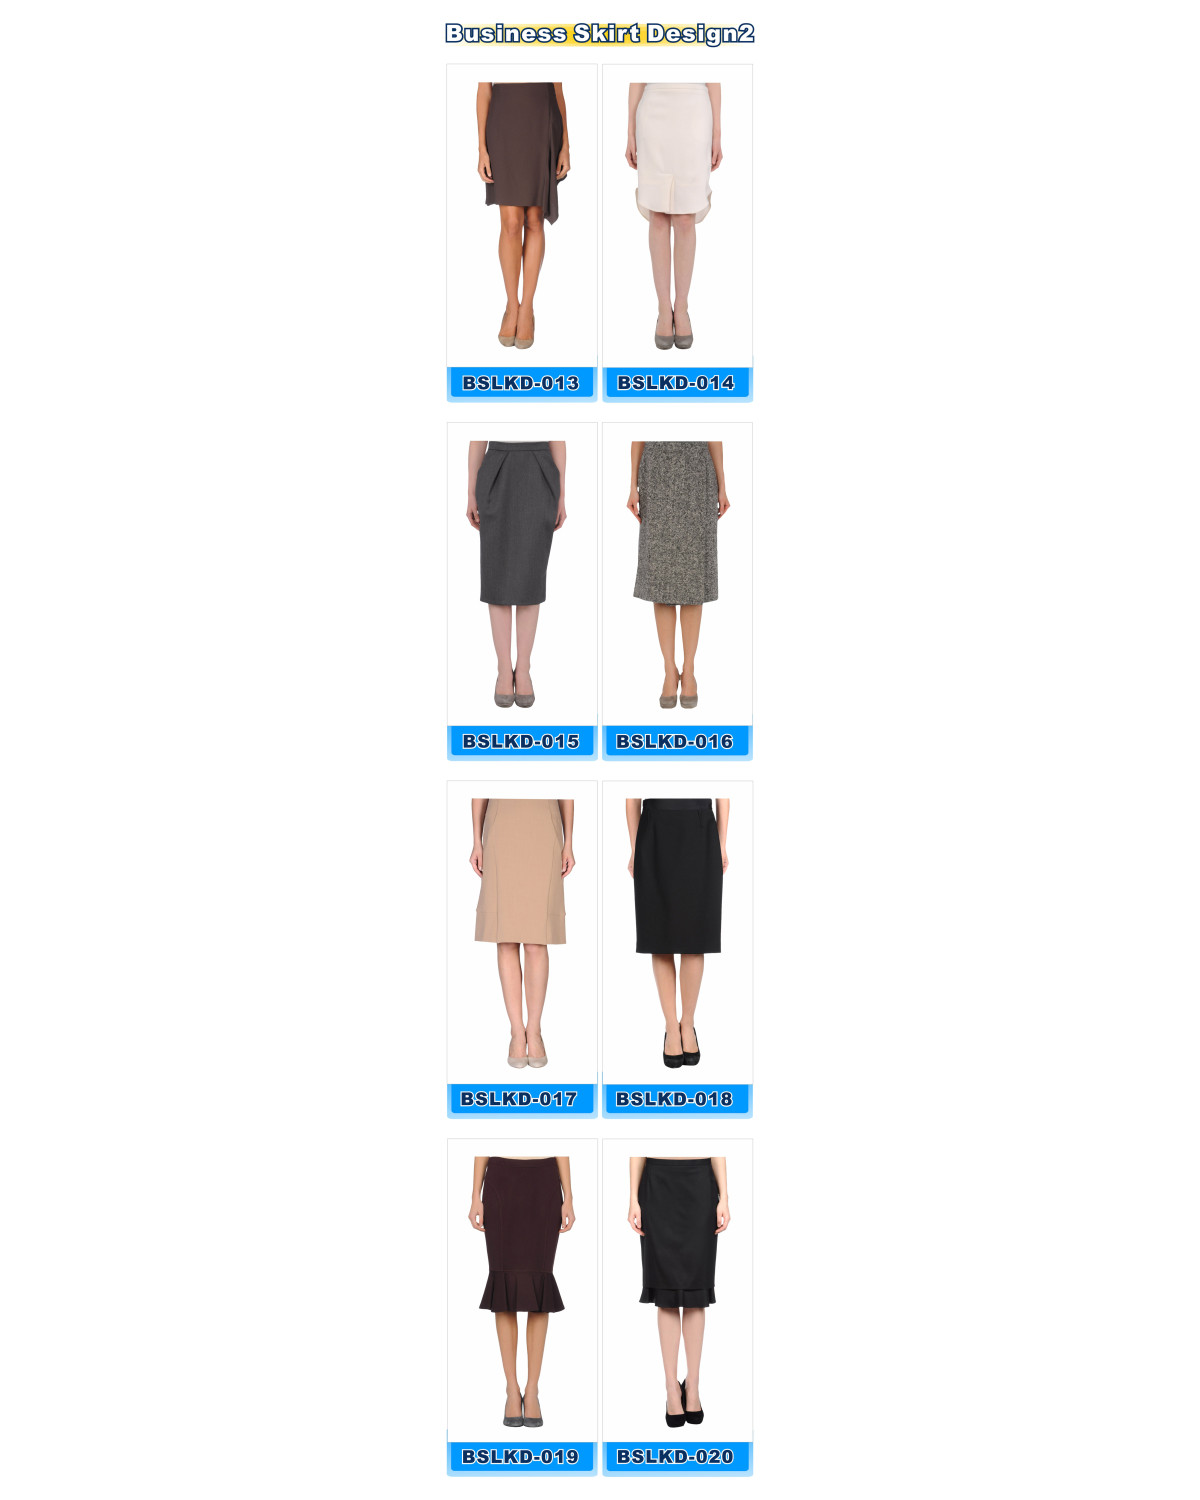 business skirts design2-20121101